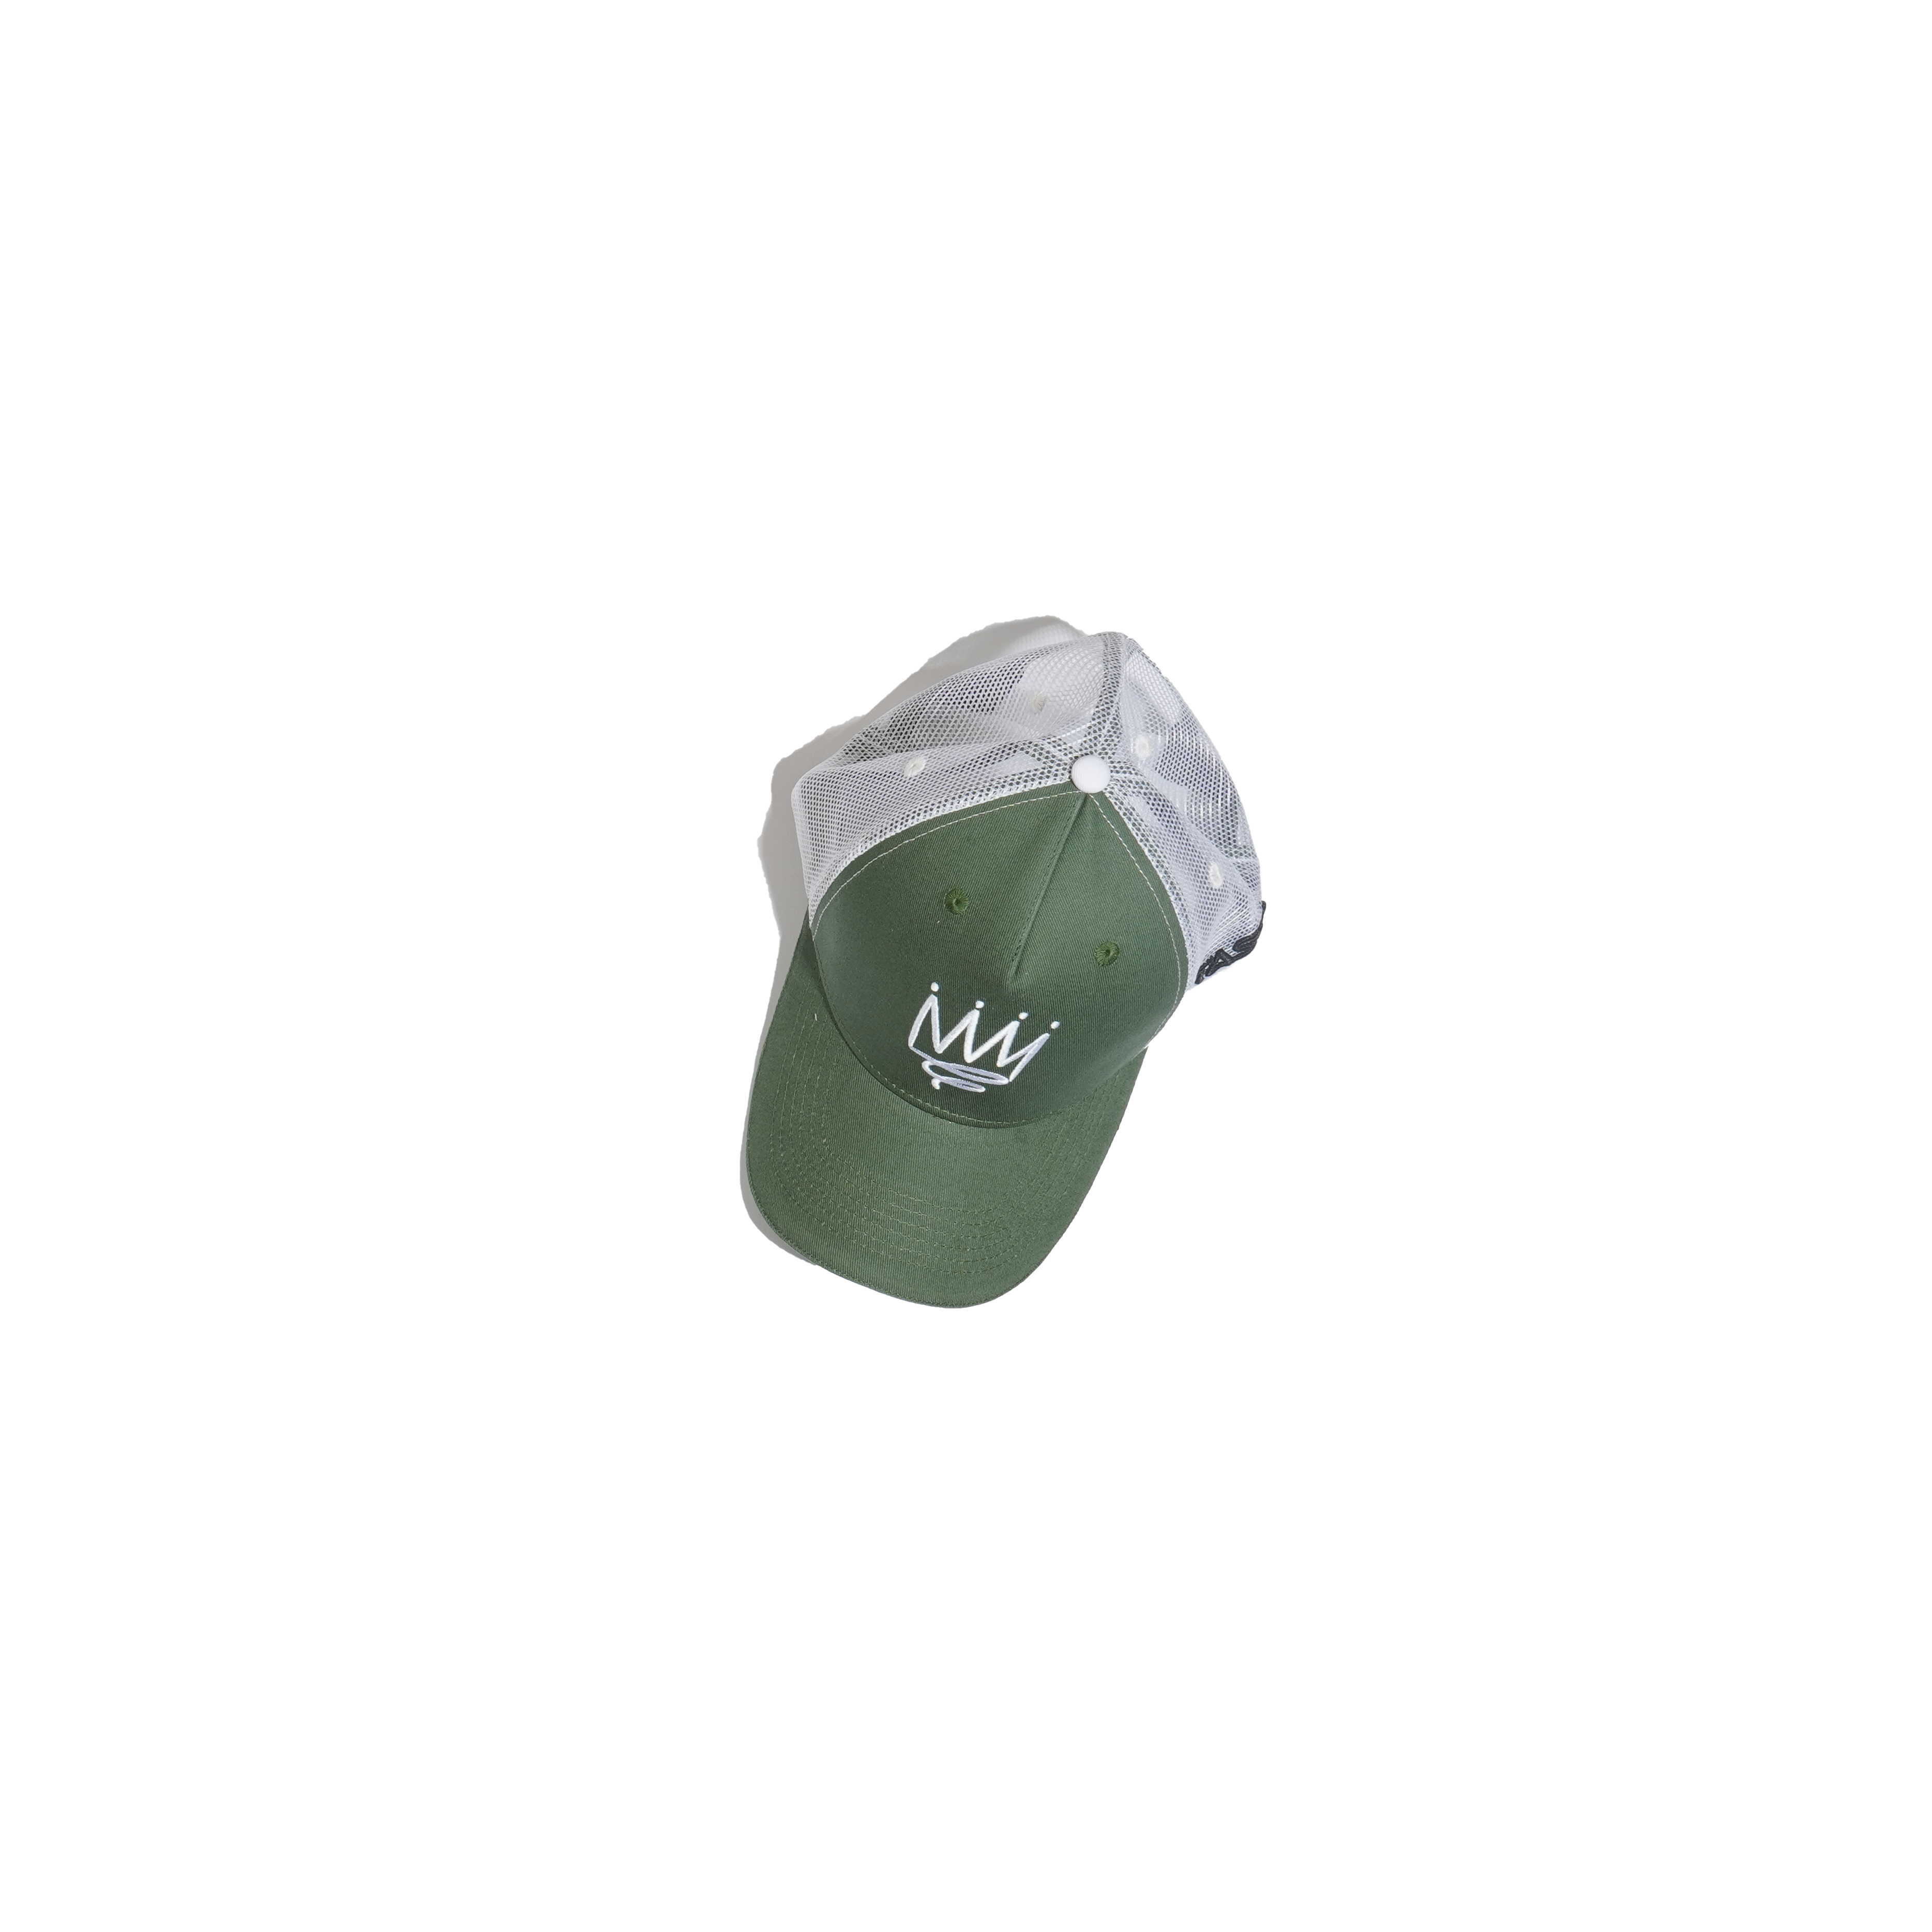 التاج - Crown cap